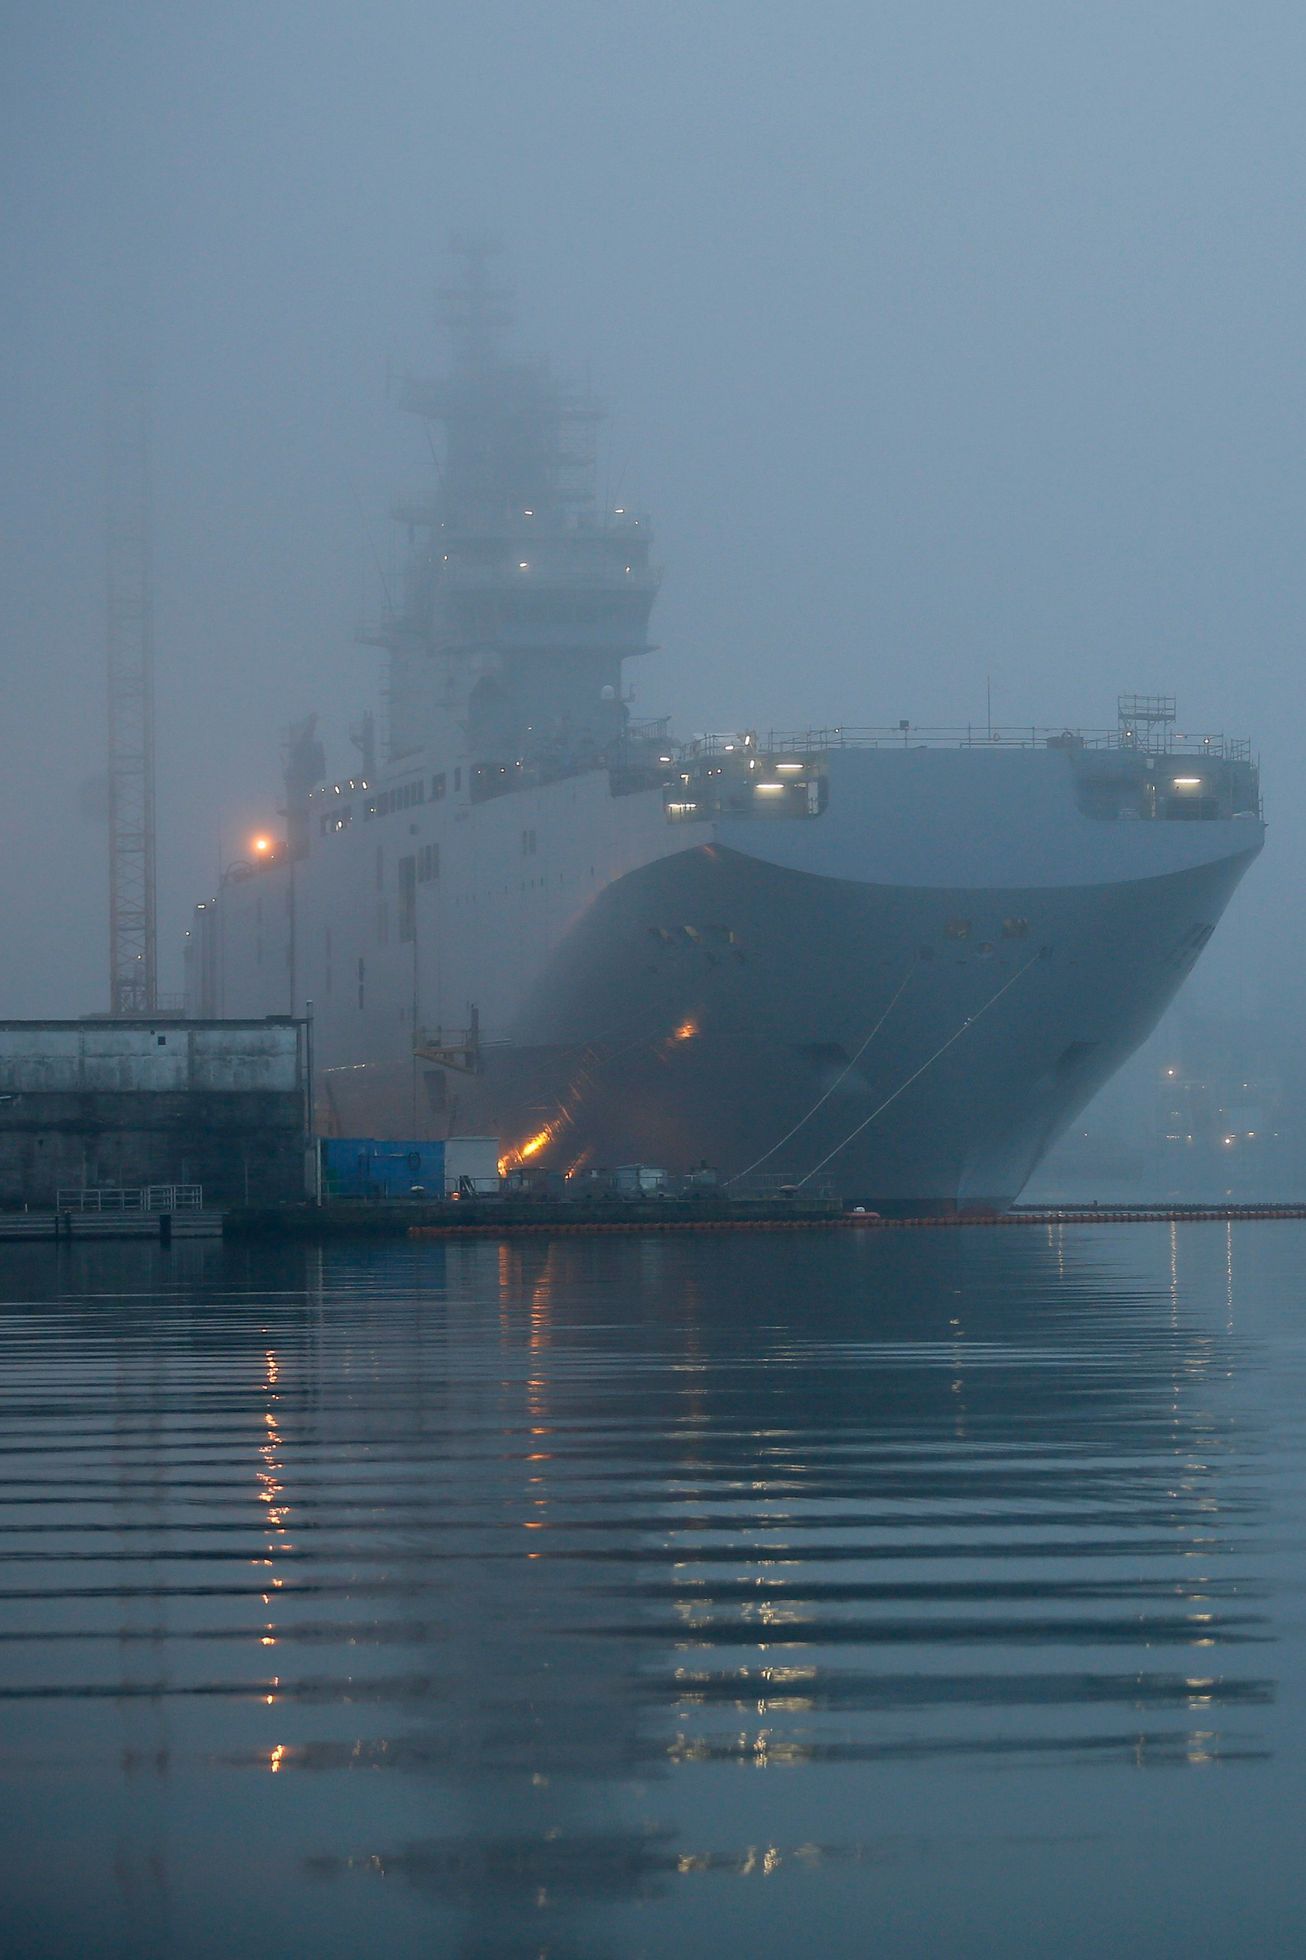 The Mistral-class helicopter carrier Sevastopol is seen at the STX Les Chantiers de l'Atlantique shipyard site in Saint-Nazaire